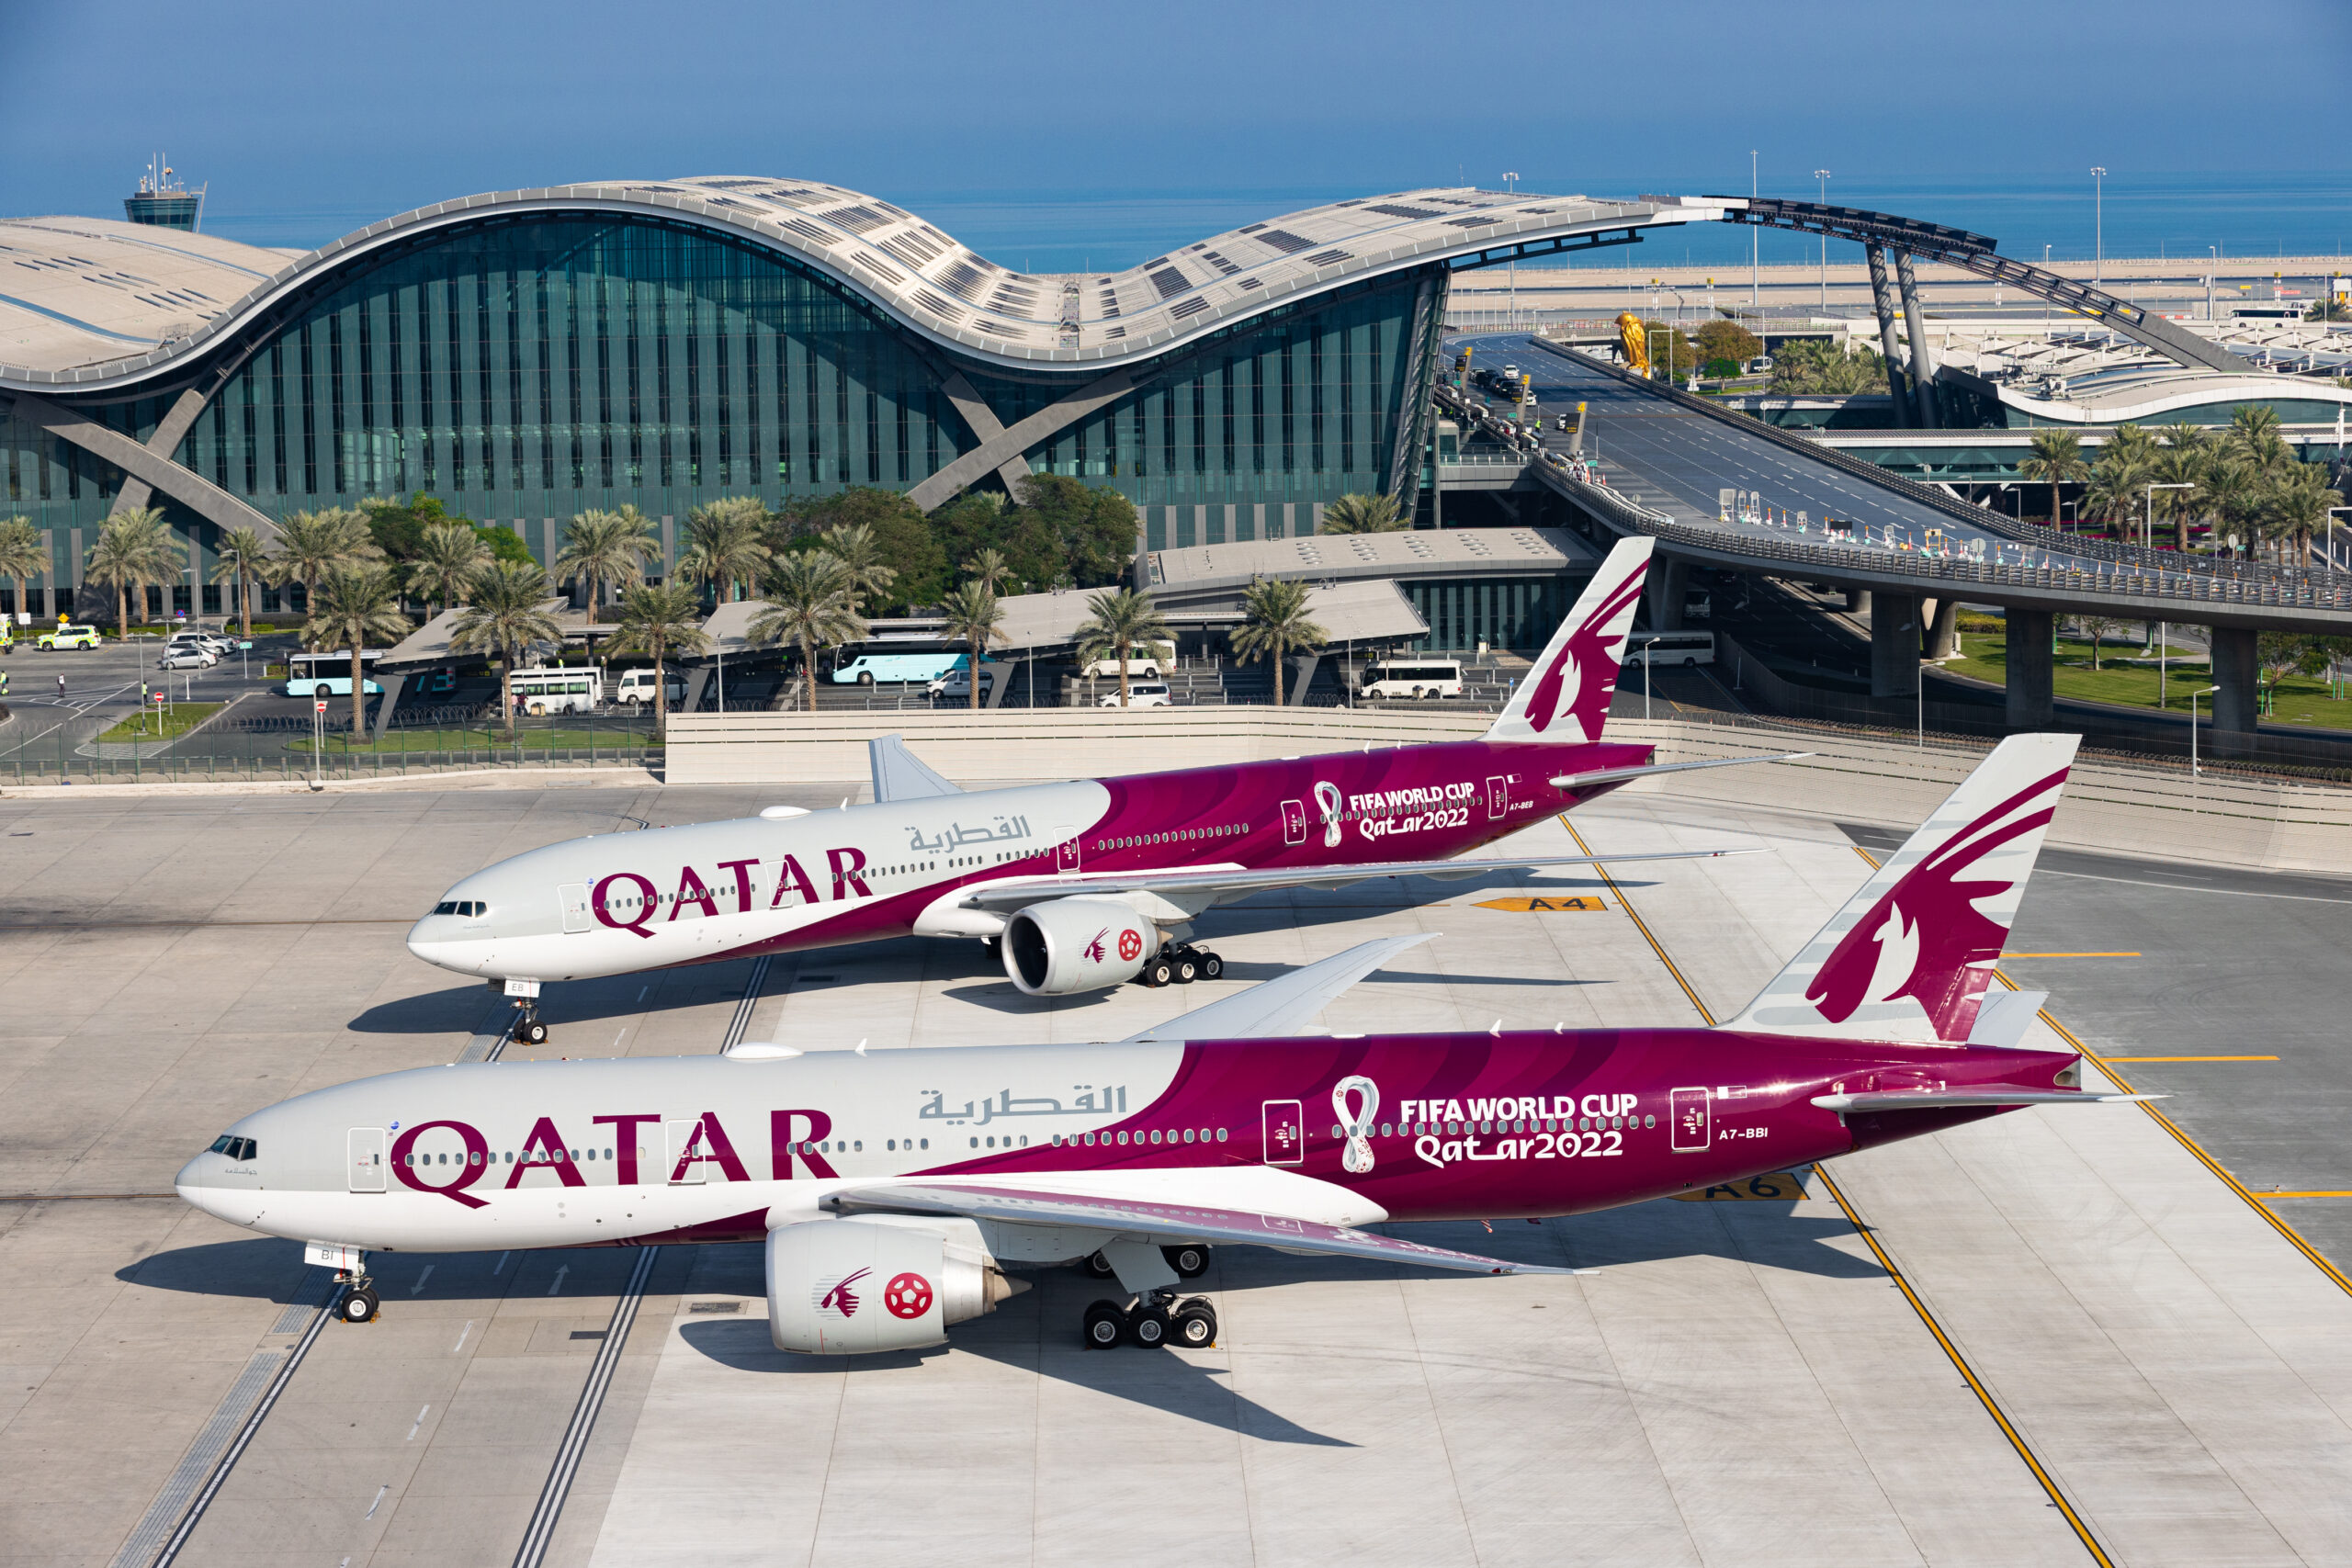 Qatar Airways credit card -- FIFA World Cup 2022 airplane design